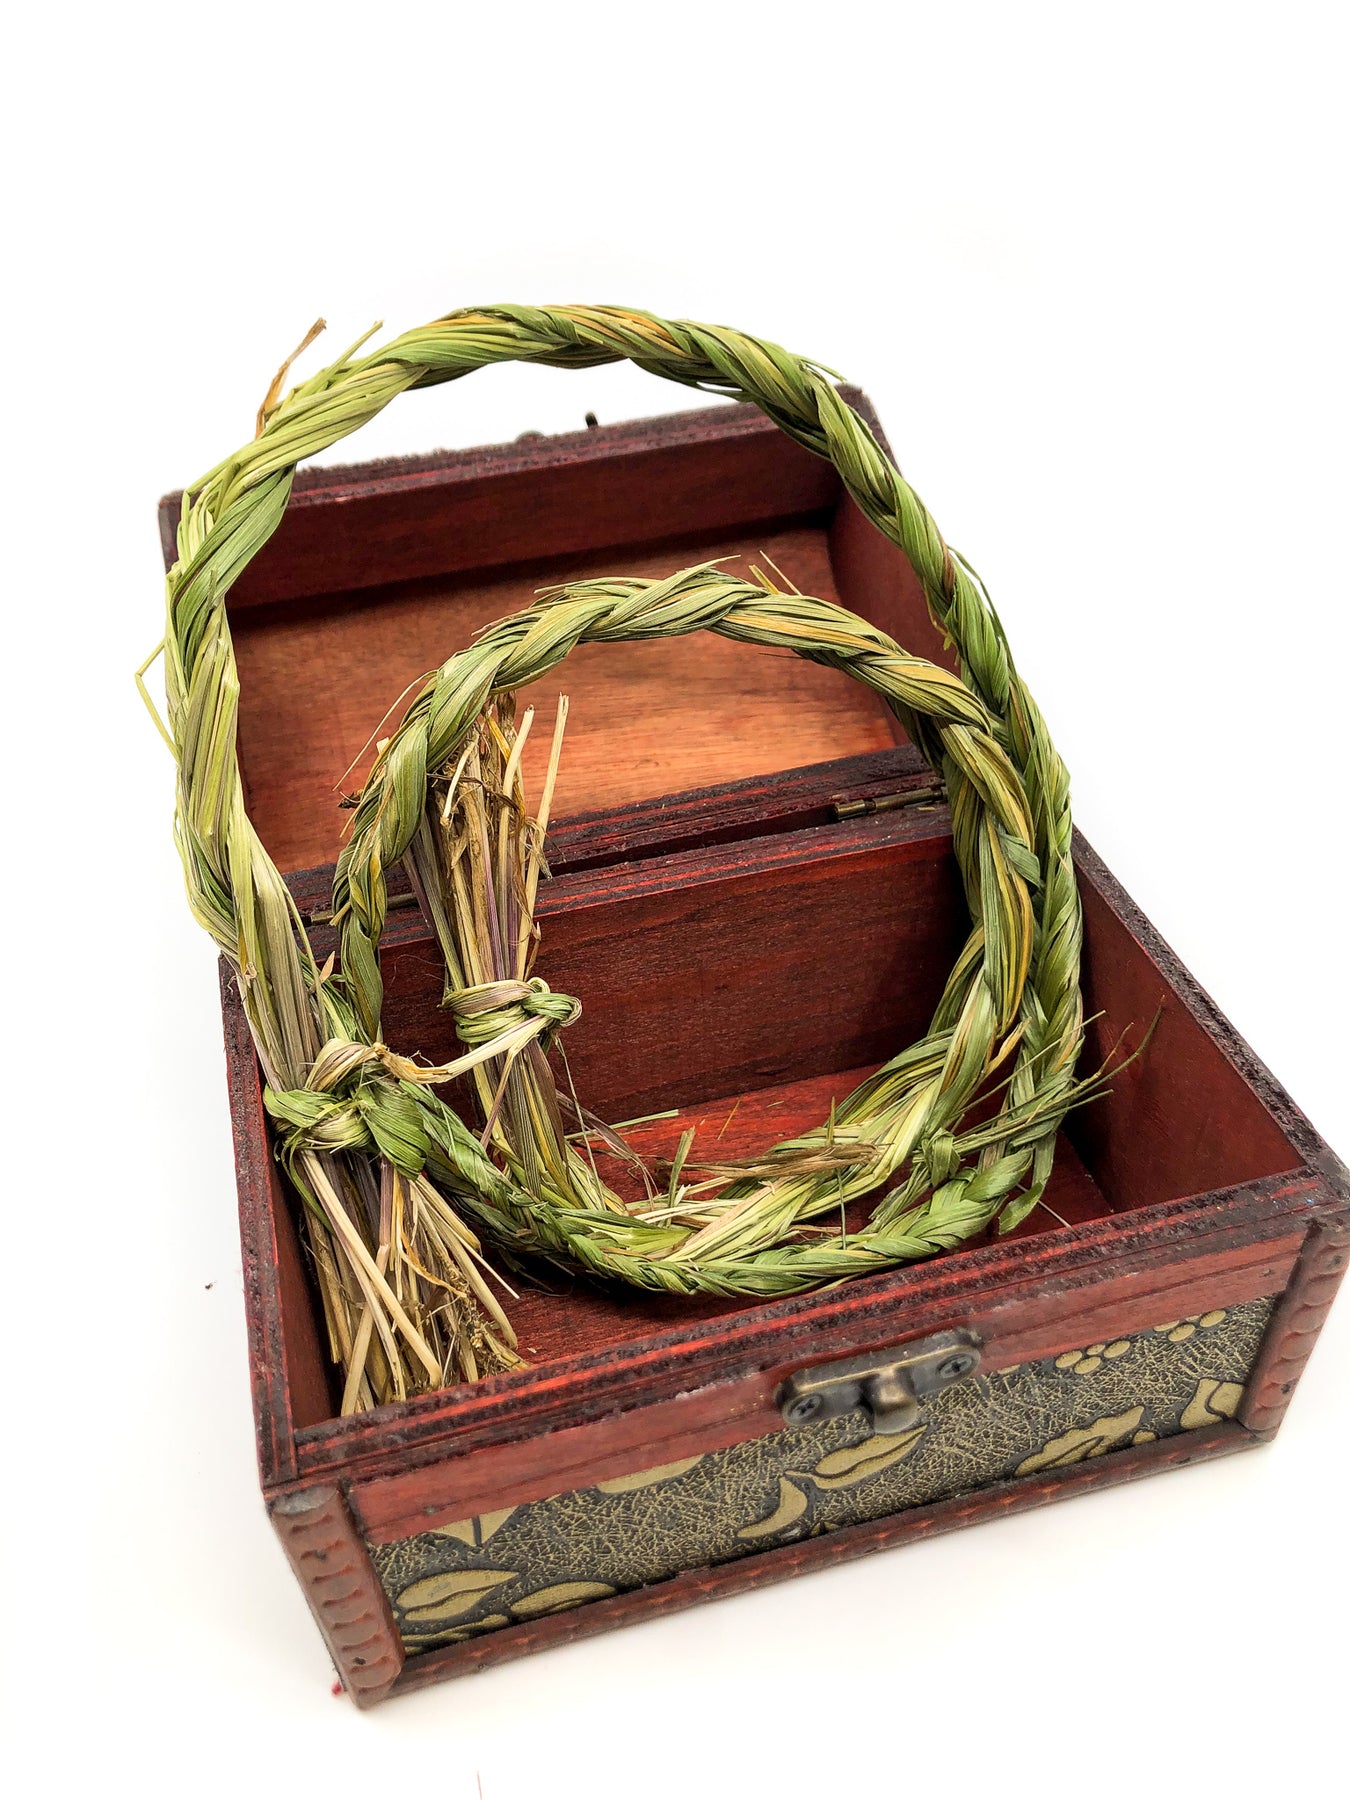 Sweetgrass Braid – Ceremoni